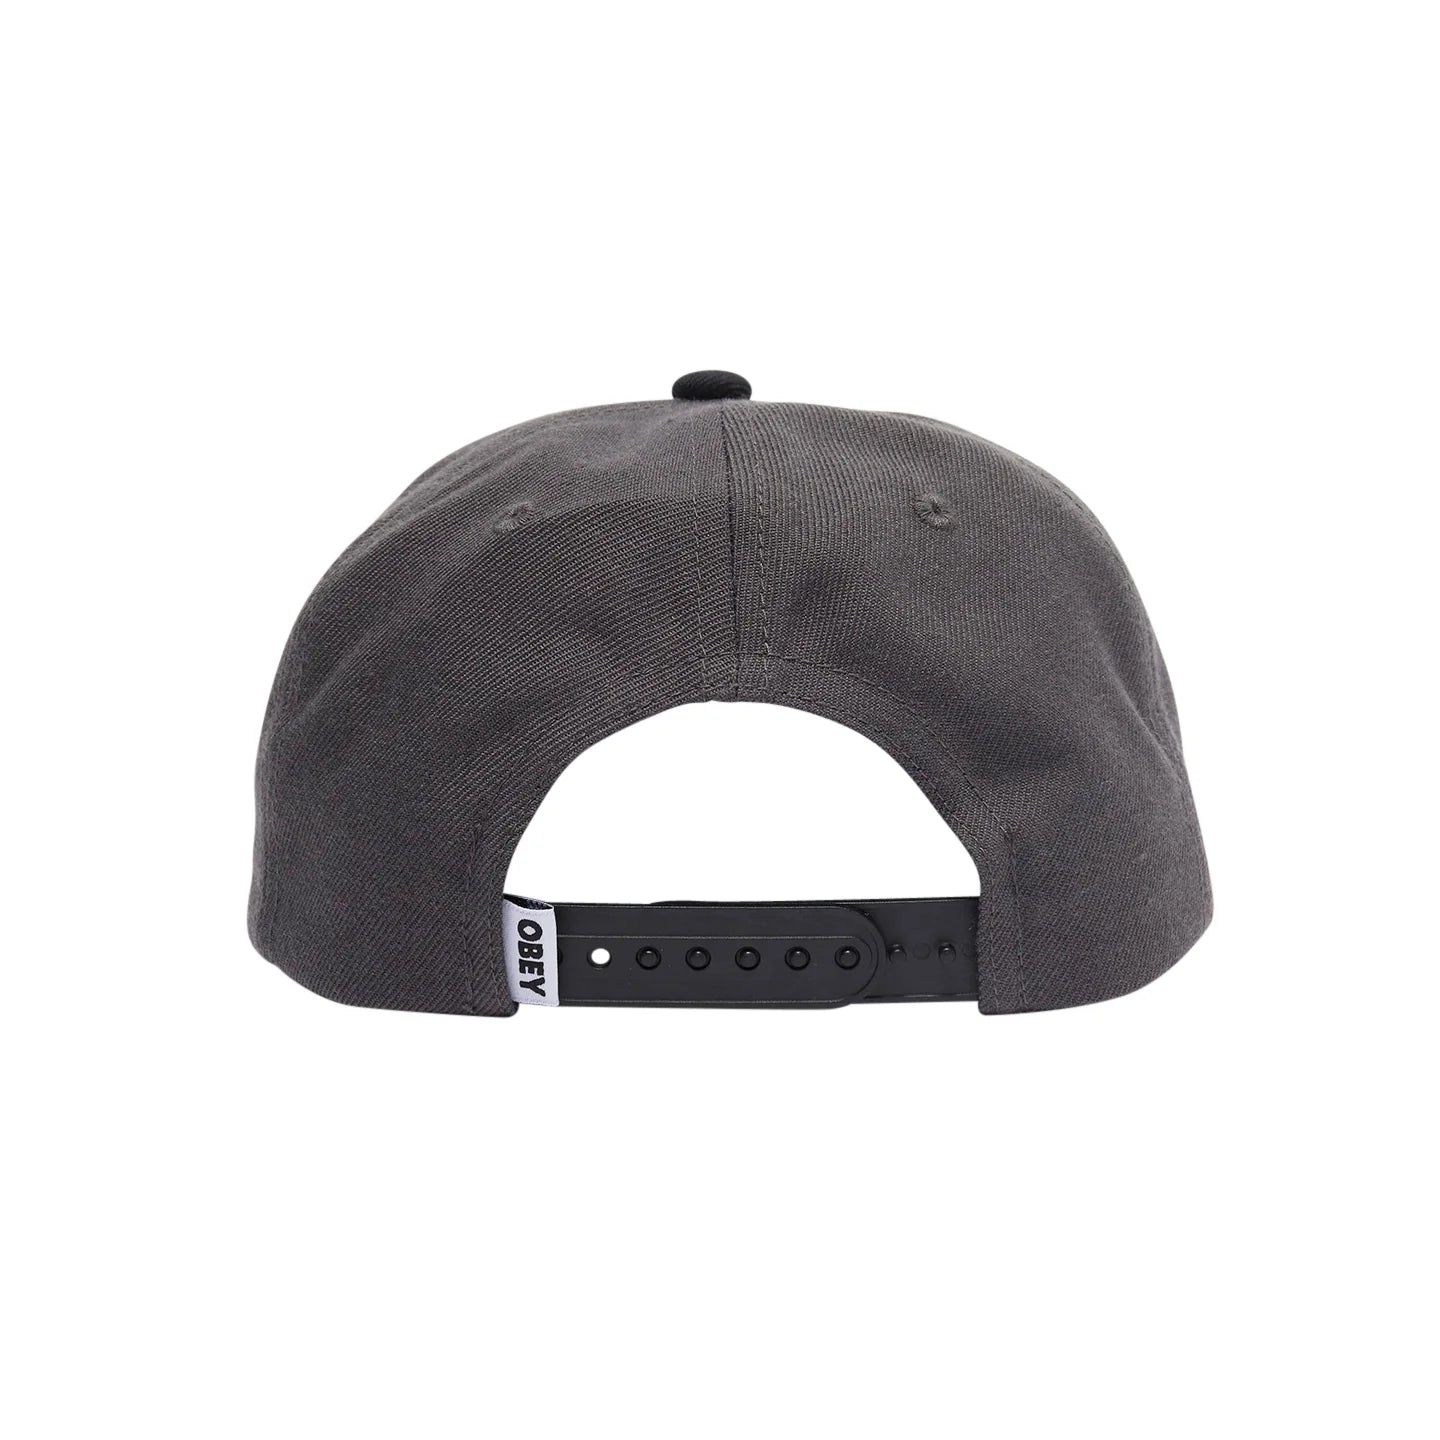 OBEY Shade 6 Panel Snapback Hat Dark Grey Multi Men's Hats Obey 